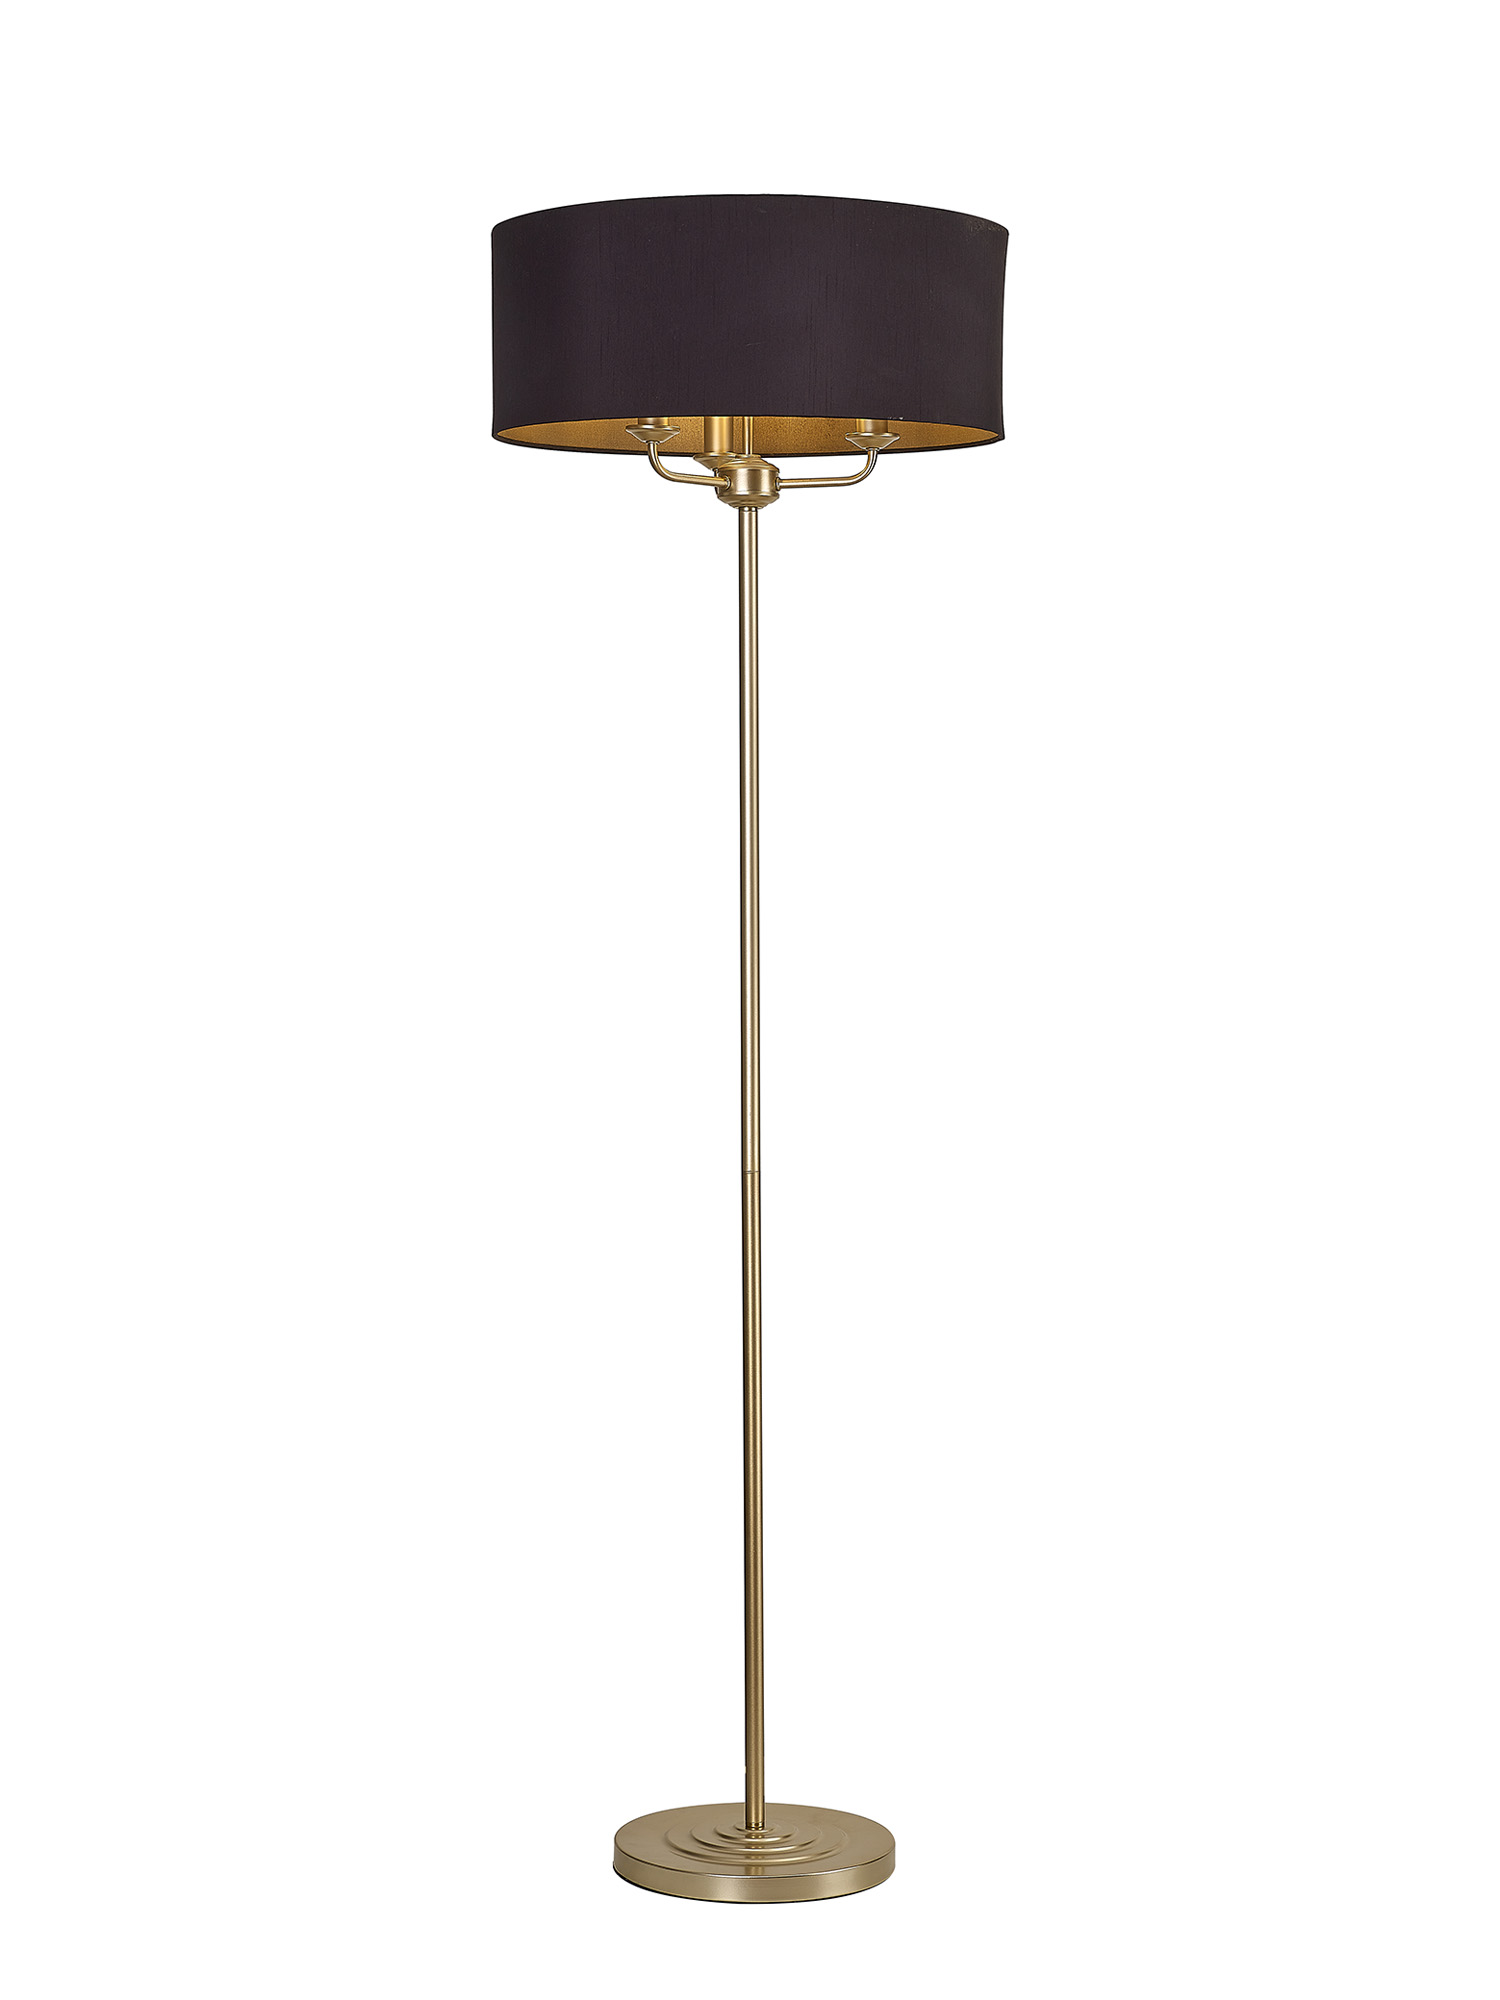 DK0999  Banyan 45cm 3 Light Floor Lamp Champagne Gold, Midnight Black